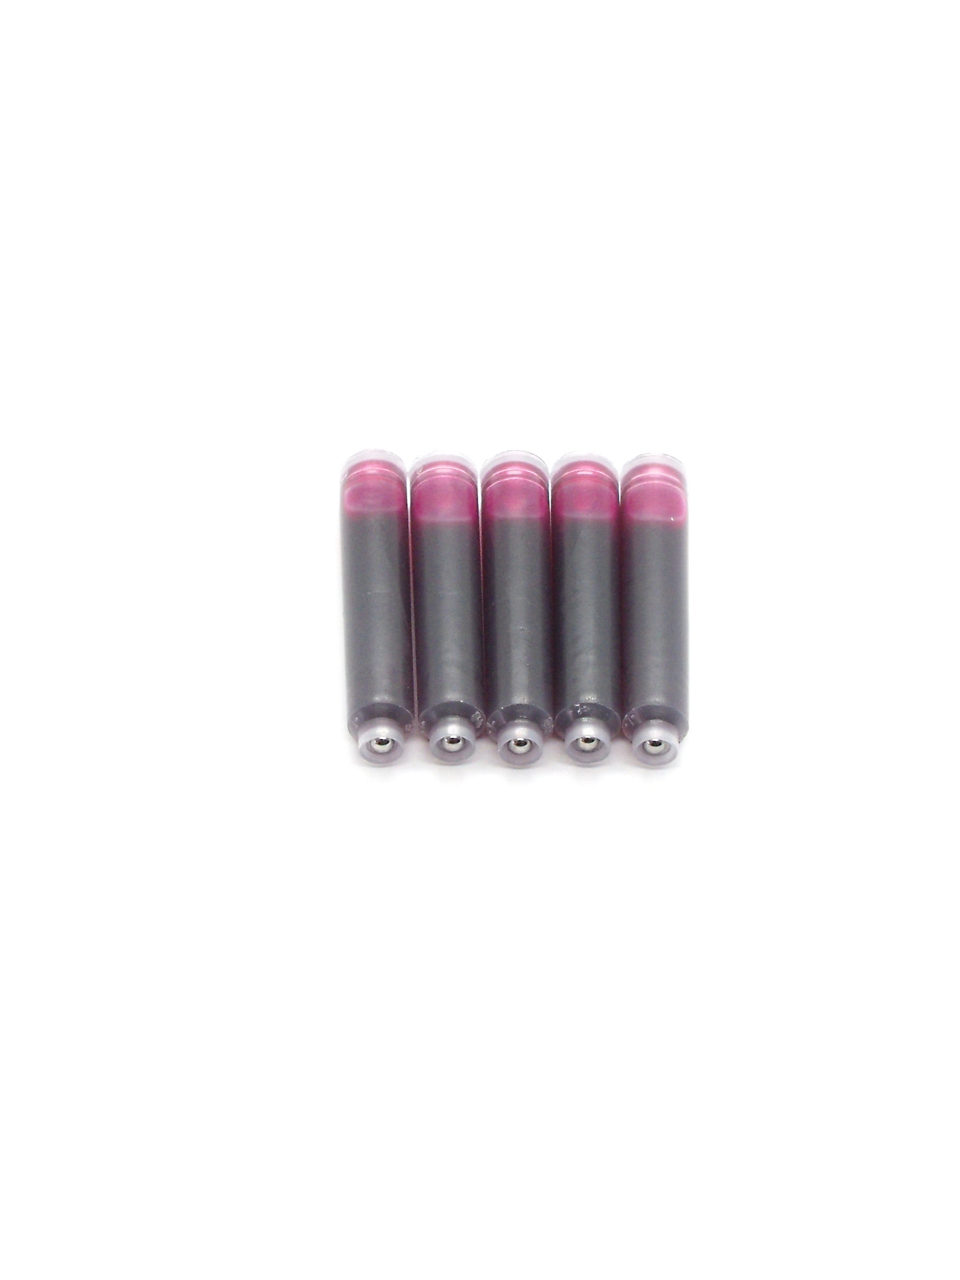 Top Ink Cartridges For Diplomat Fountain Pens (Pink)